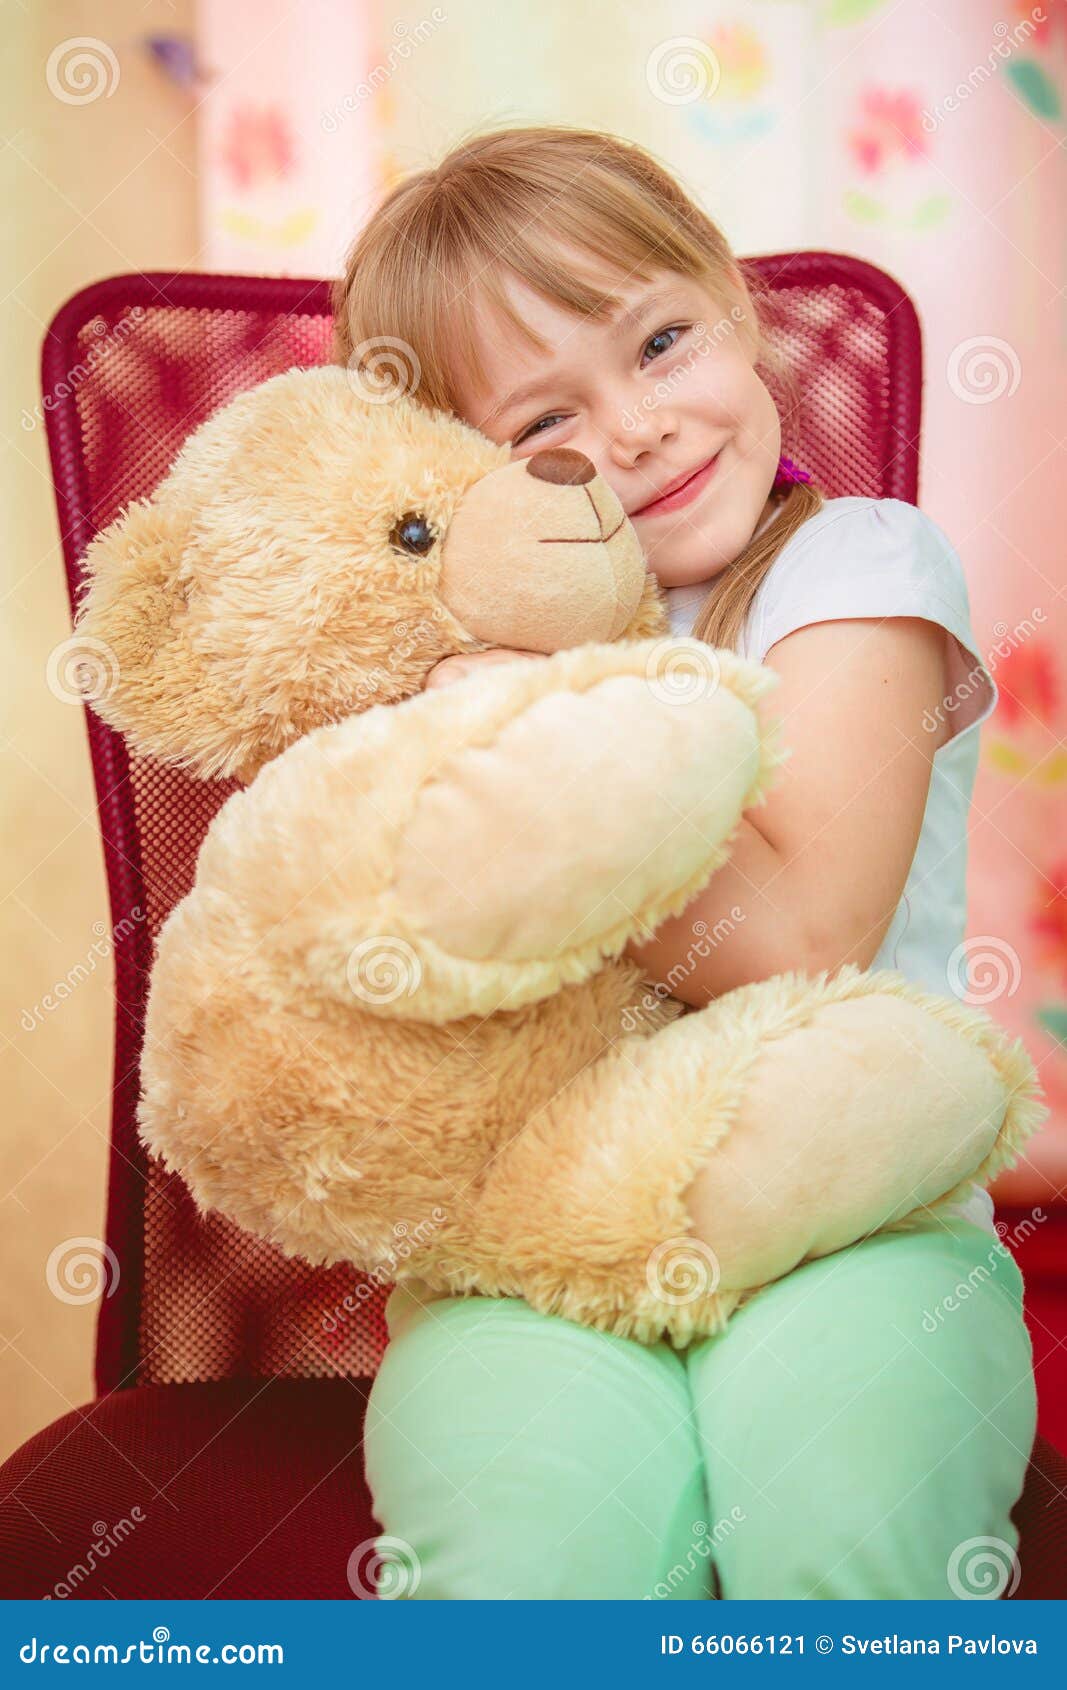 Little Girl Hugging Teddy Bear Stock Image - Image of indoor, human ...